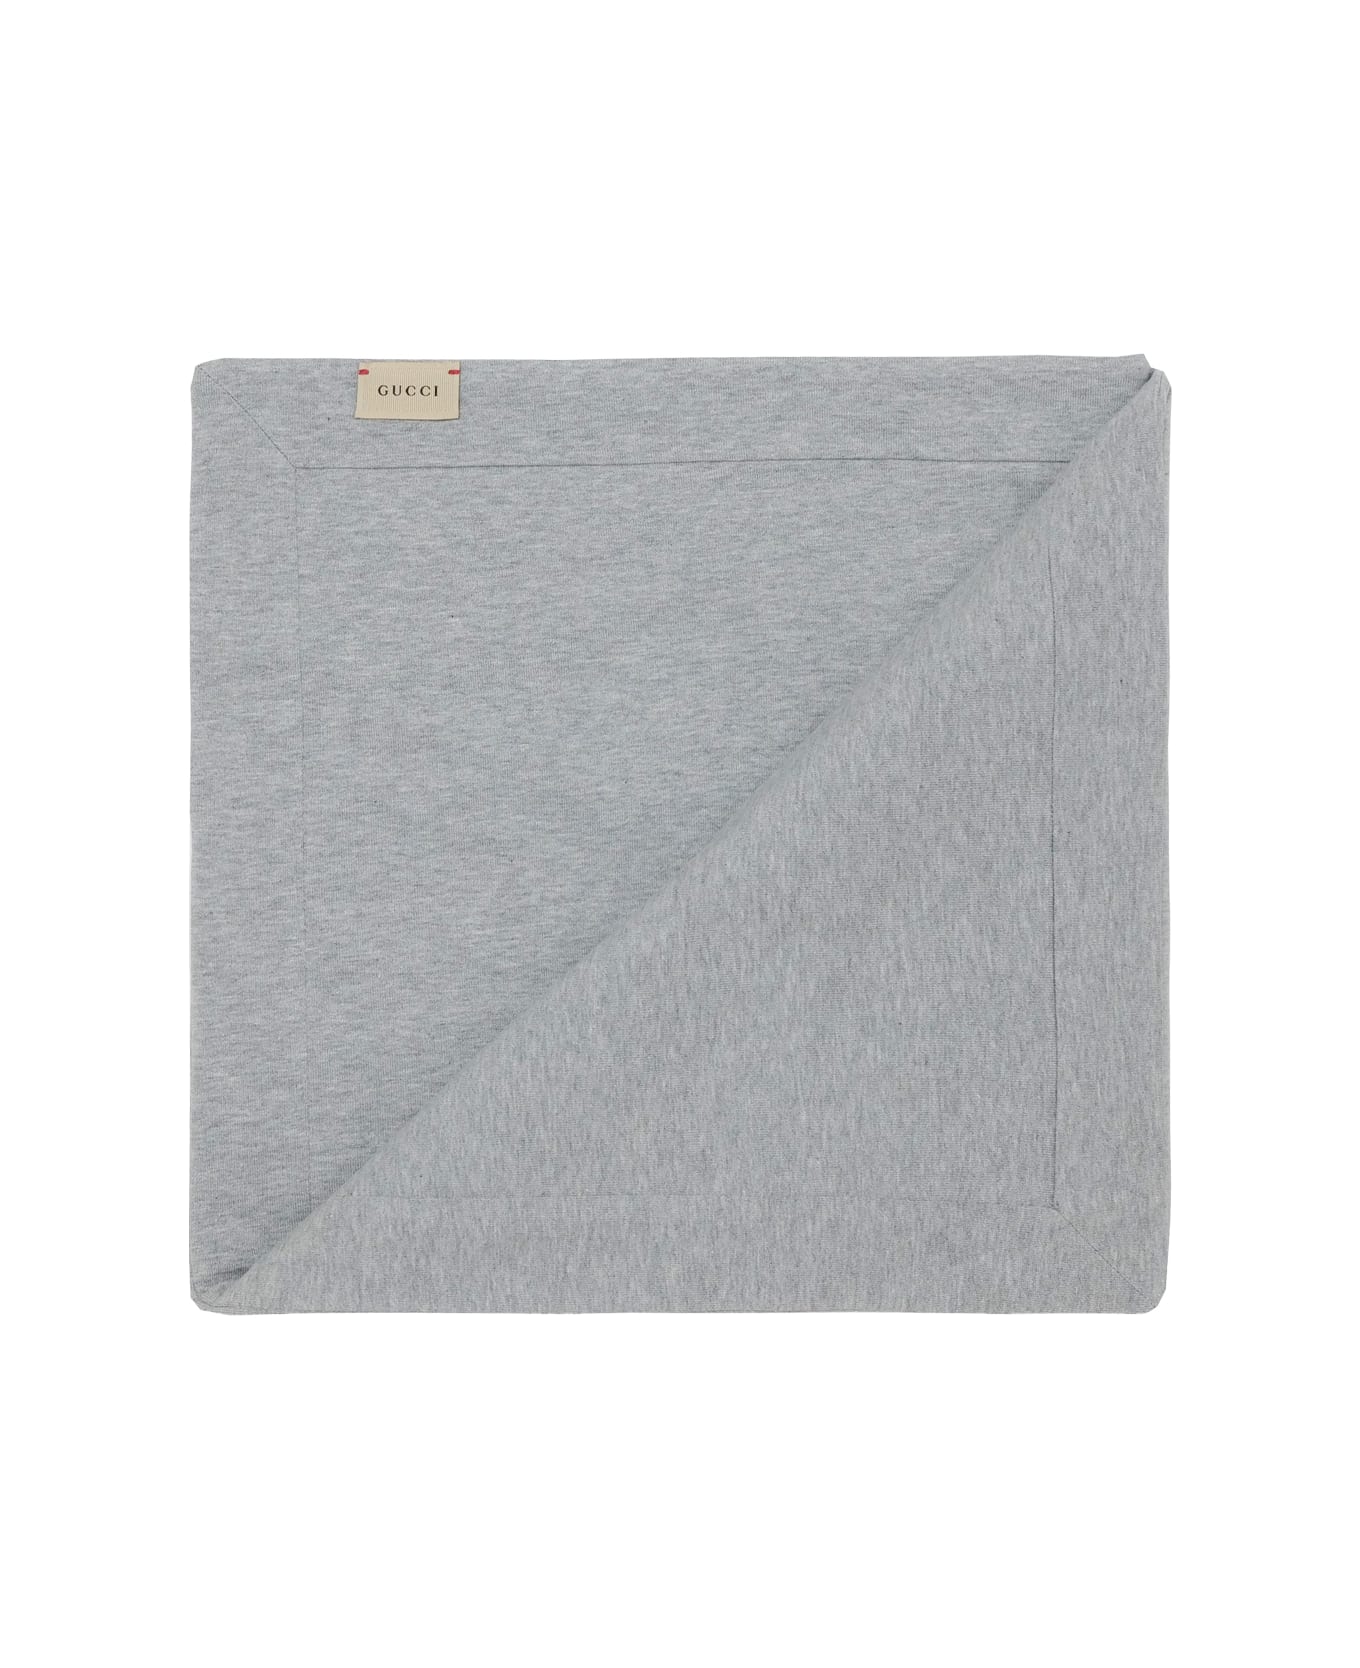 Gucci Baby Blanket - Grey